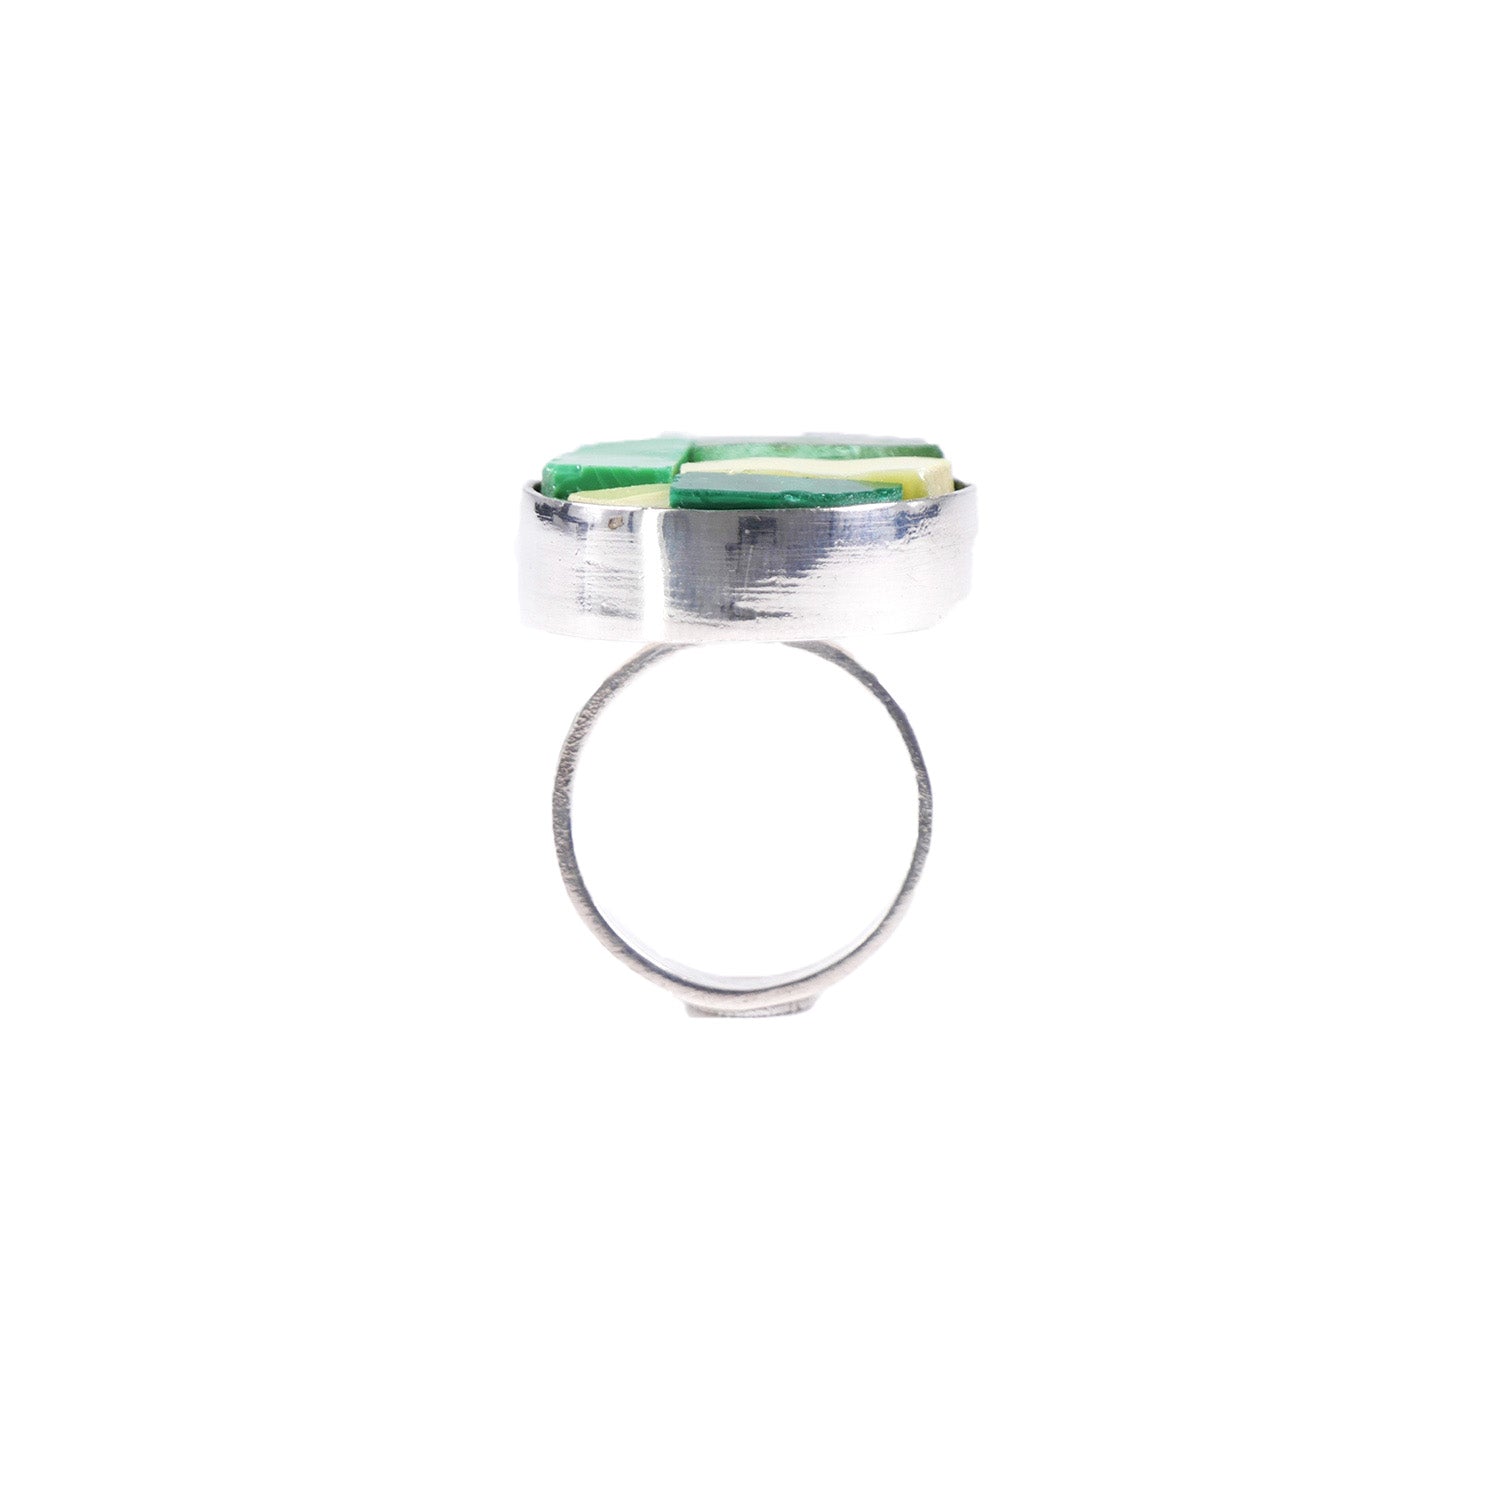 NILAJA [ニラジャ] / round glass ring [ラウンドグラスリング] (green1)